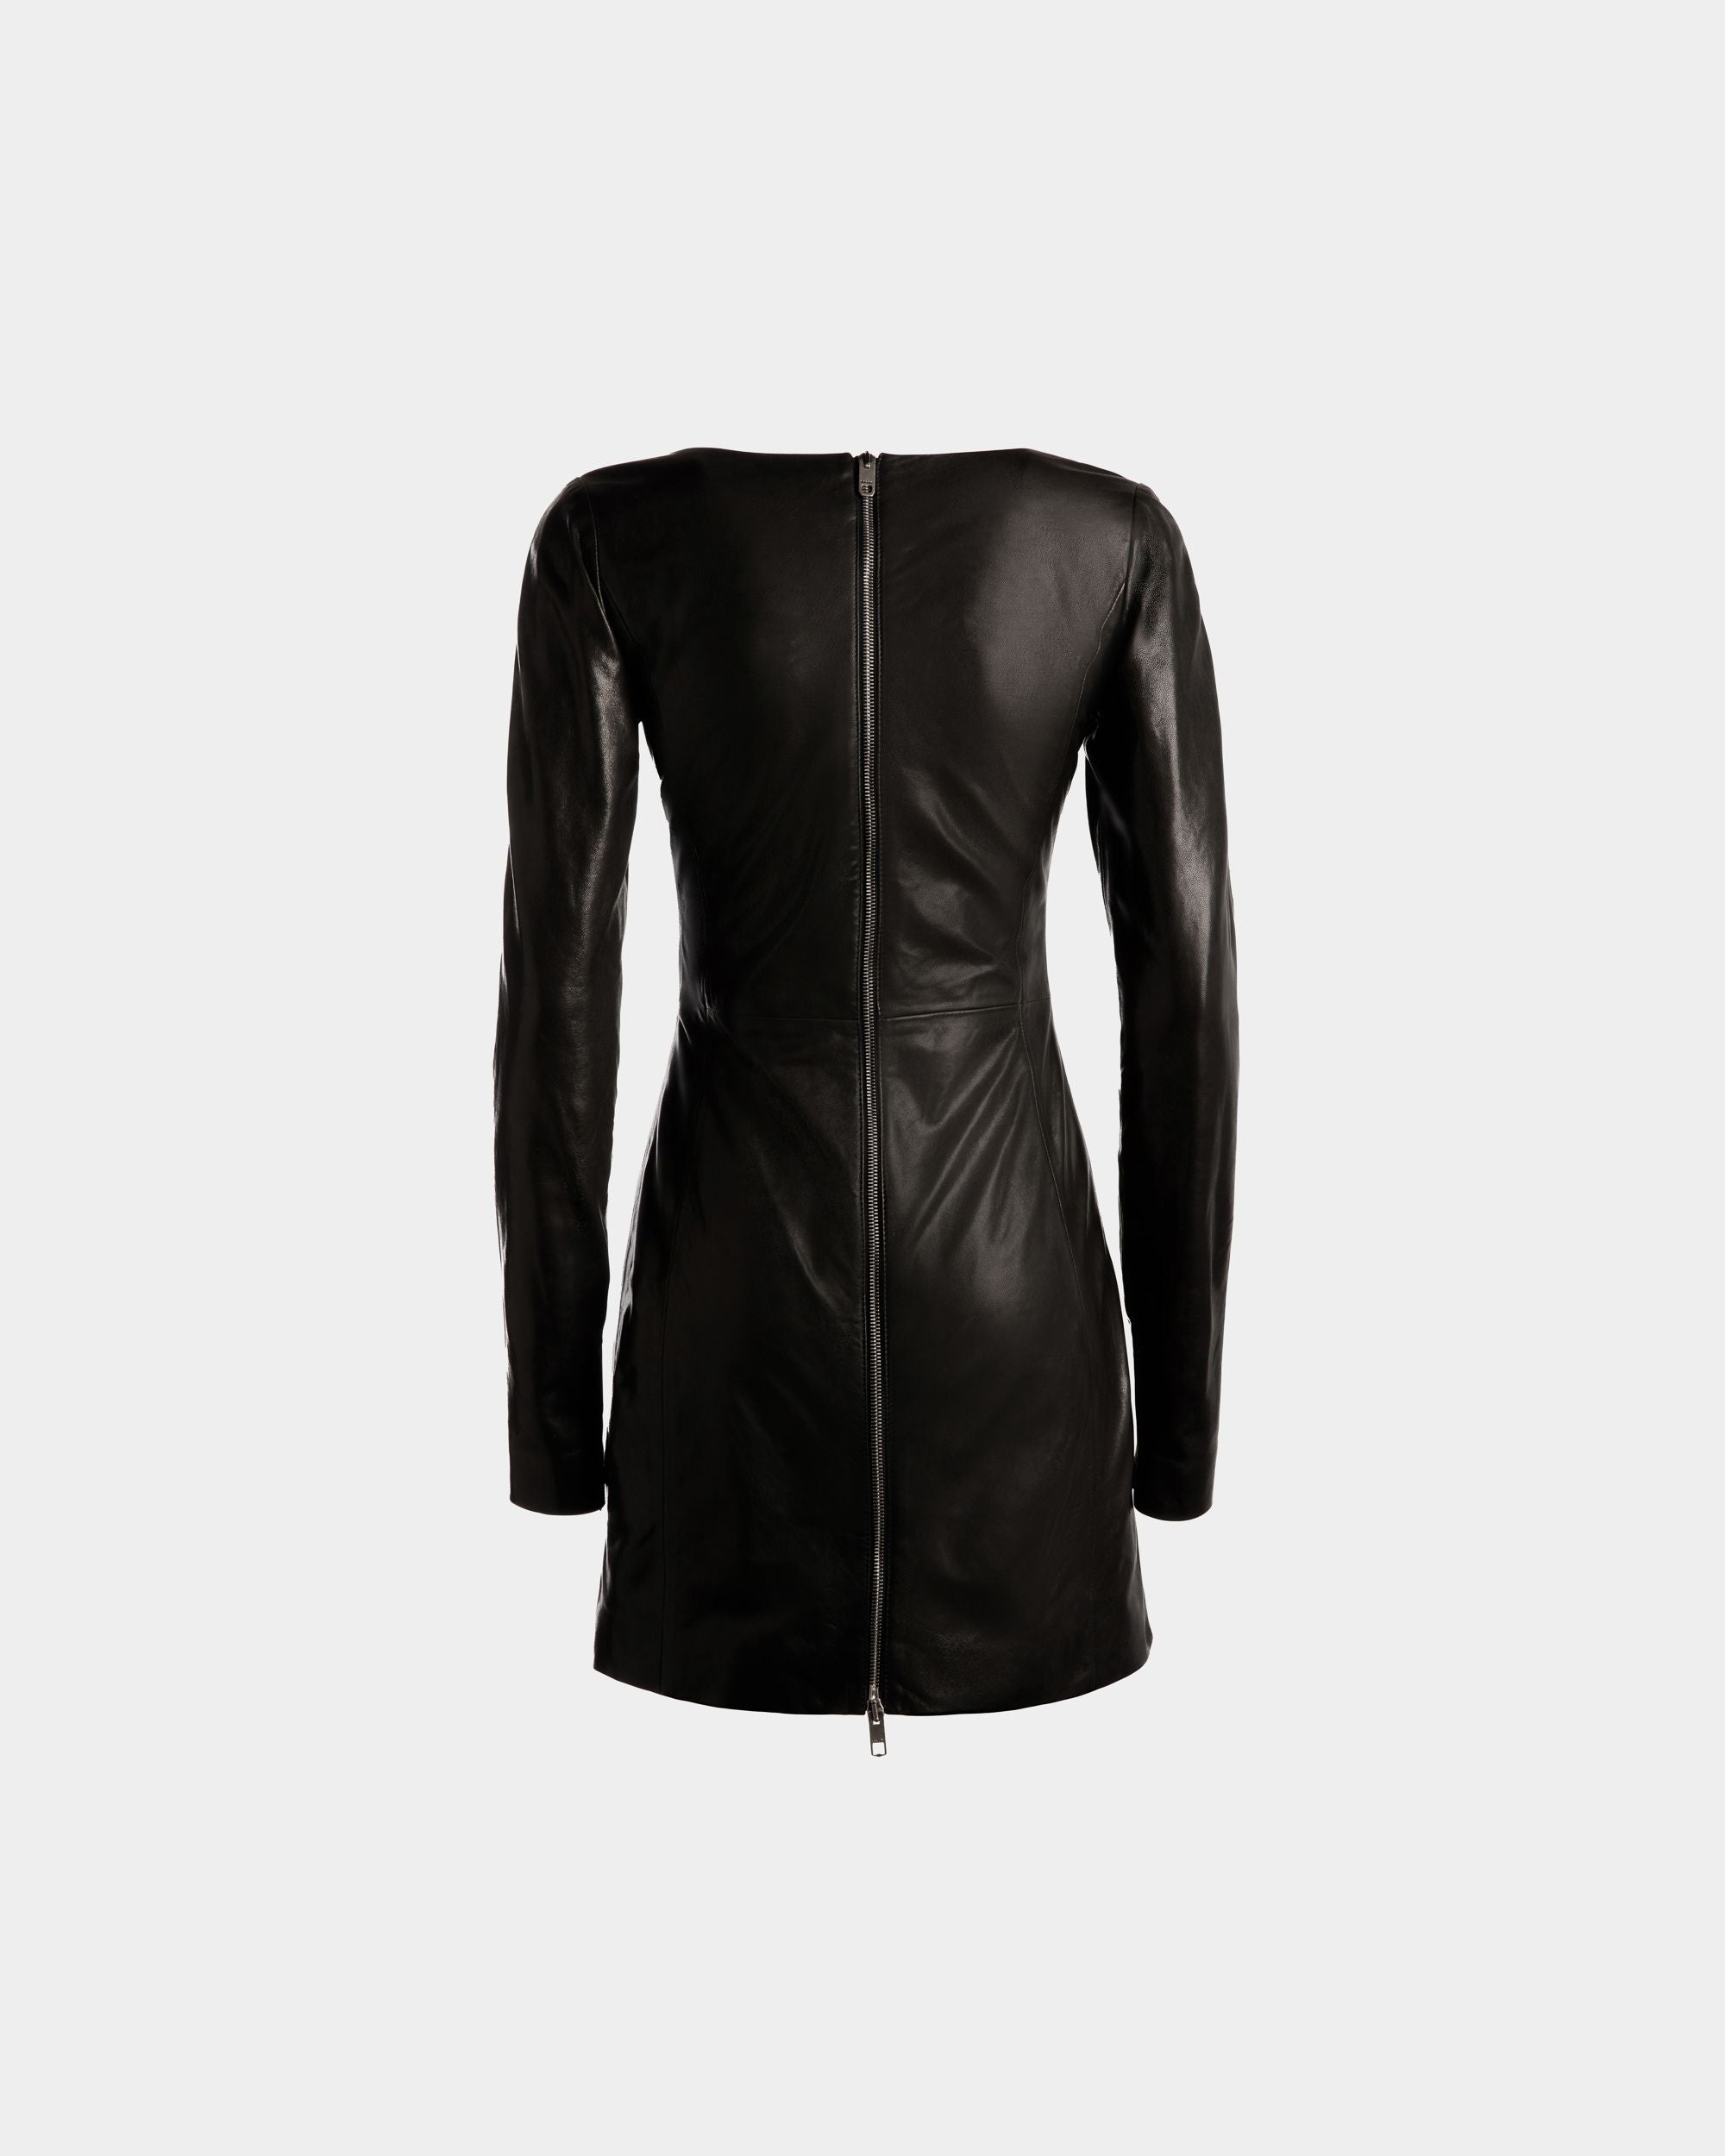 Women's Long Sleeve Mini Dress in Black Leather | Bally | Still Life Back